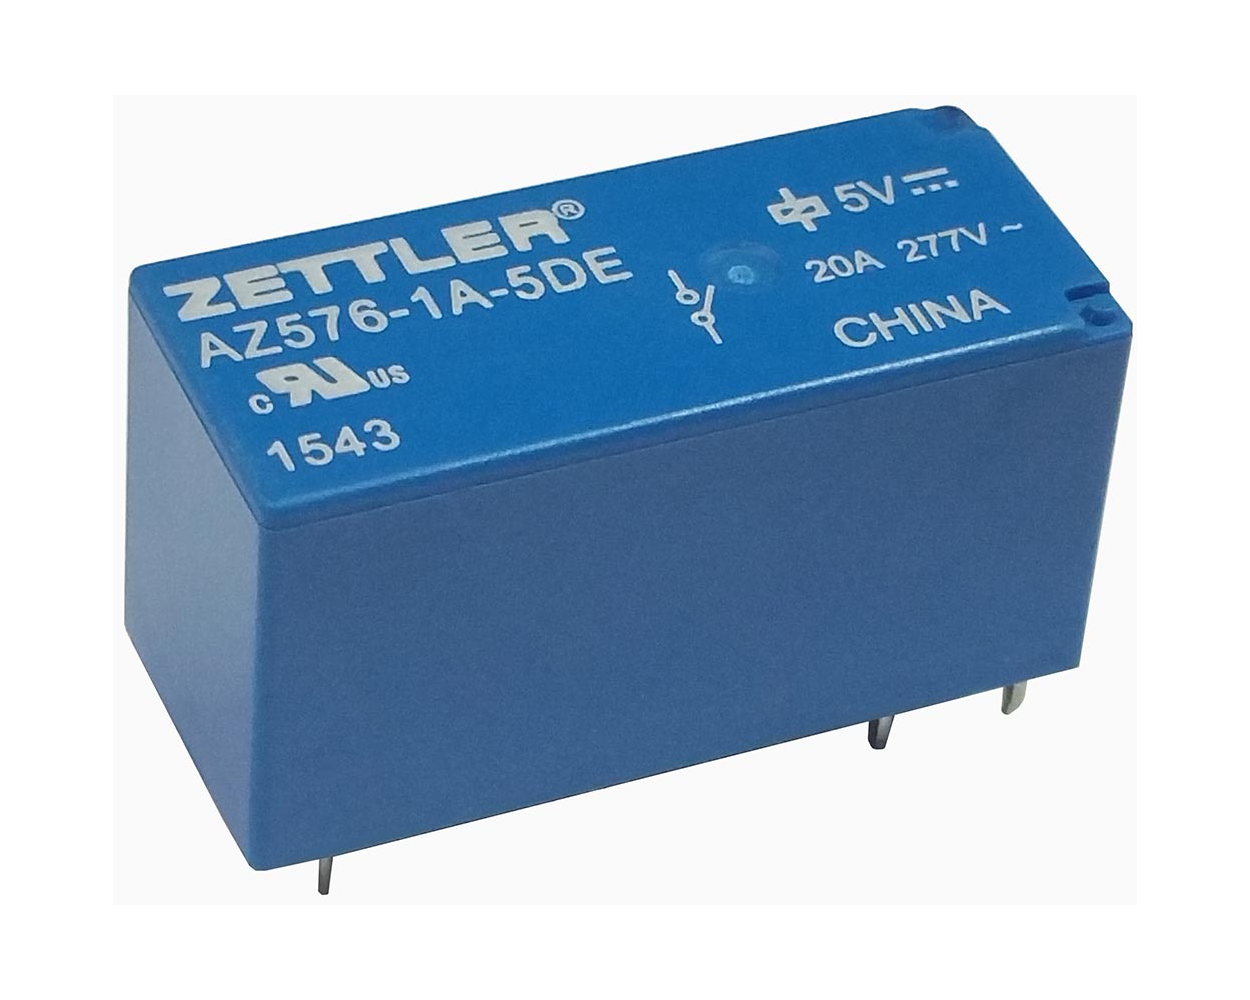 American Zettler Industrial Relay AZ576 Series